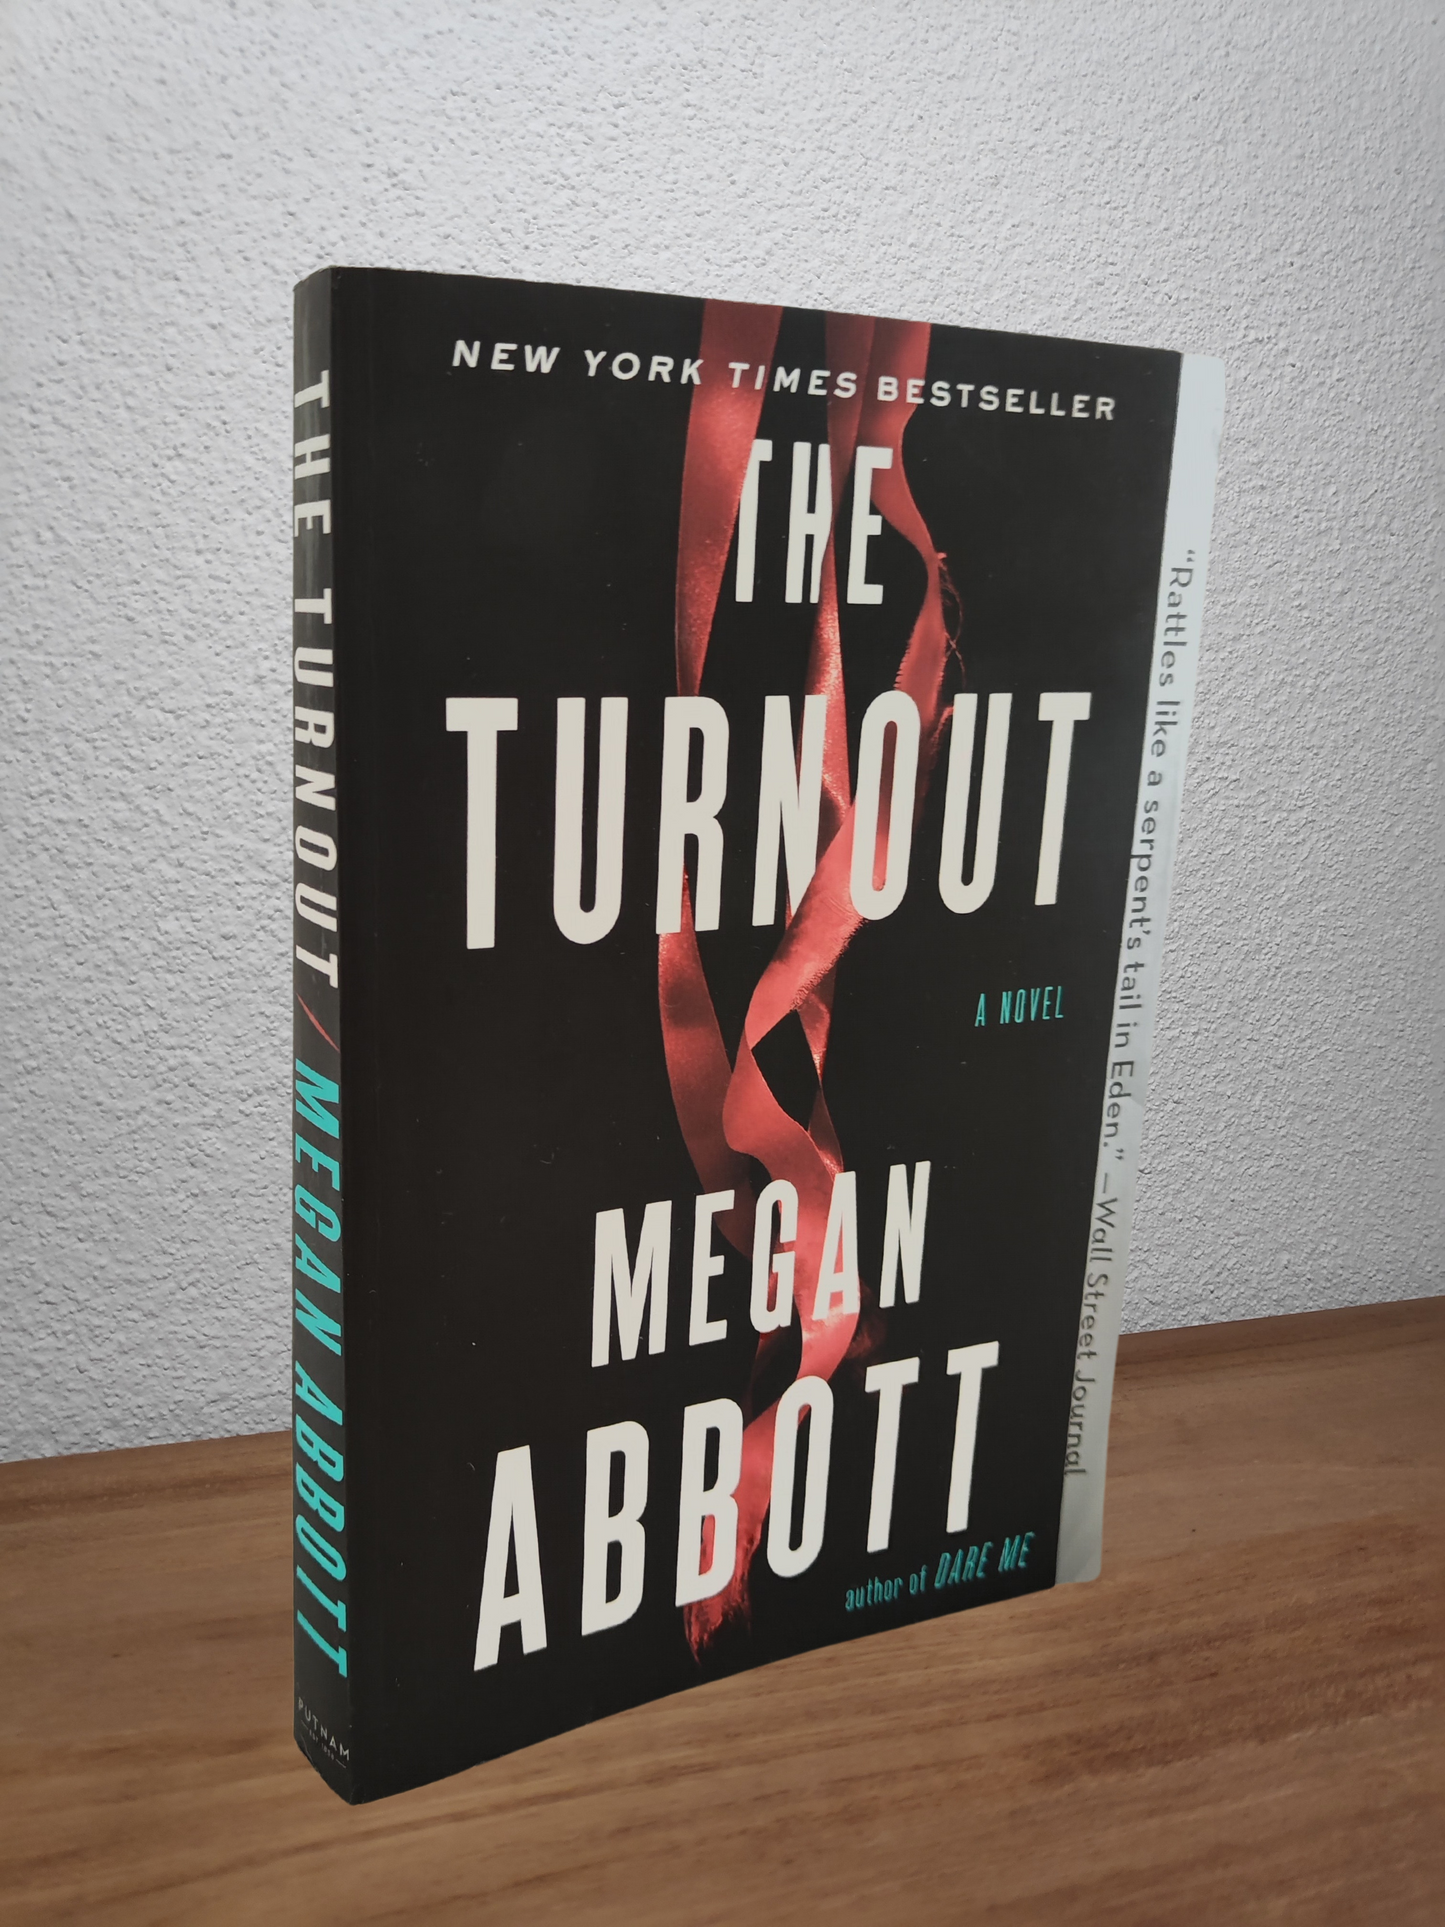 Megan Abbott - The Turnout